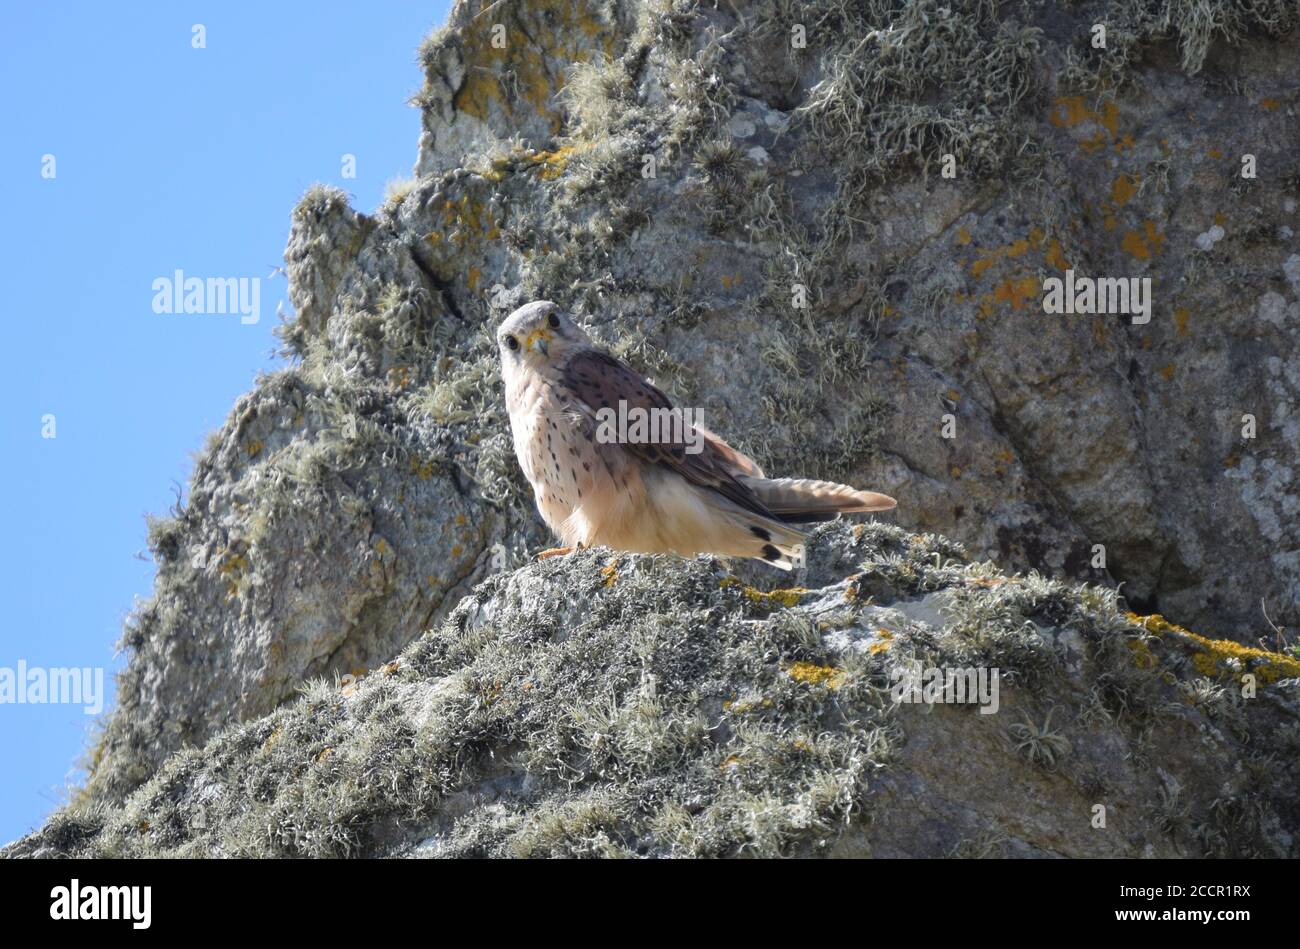 Kestrel perched on rock looking at camera Stock Photo